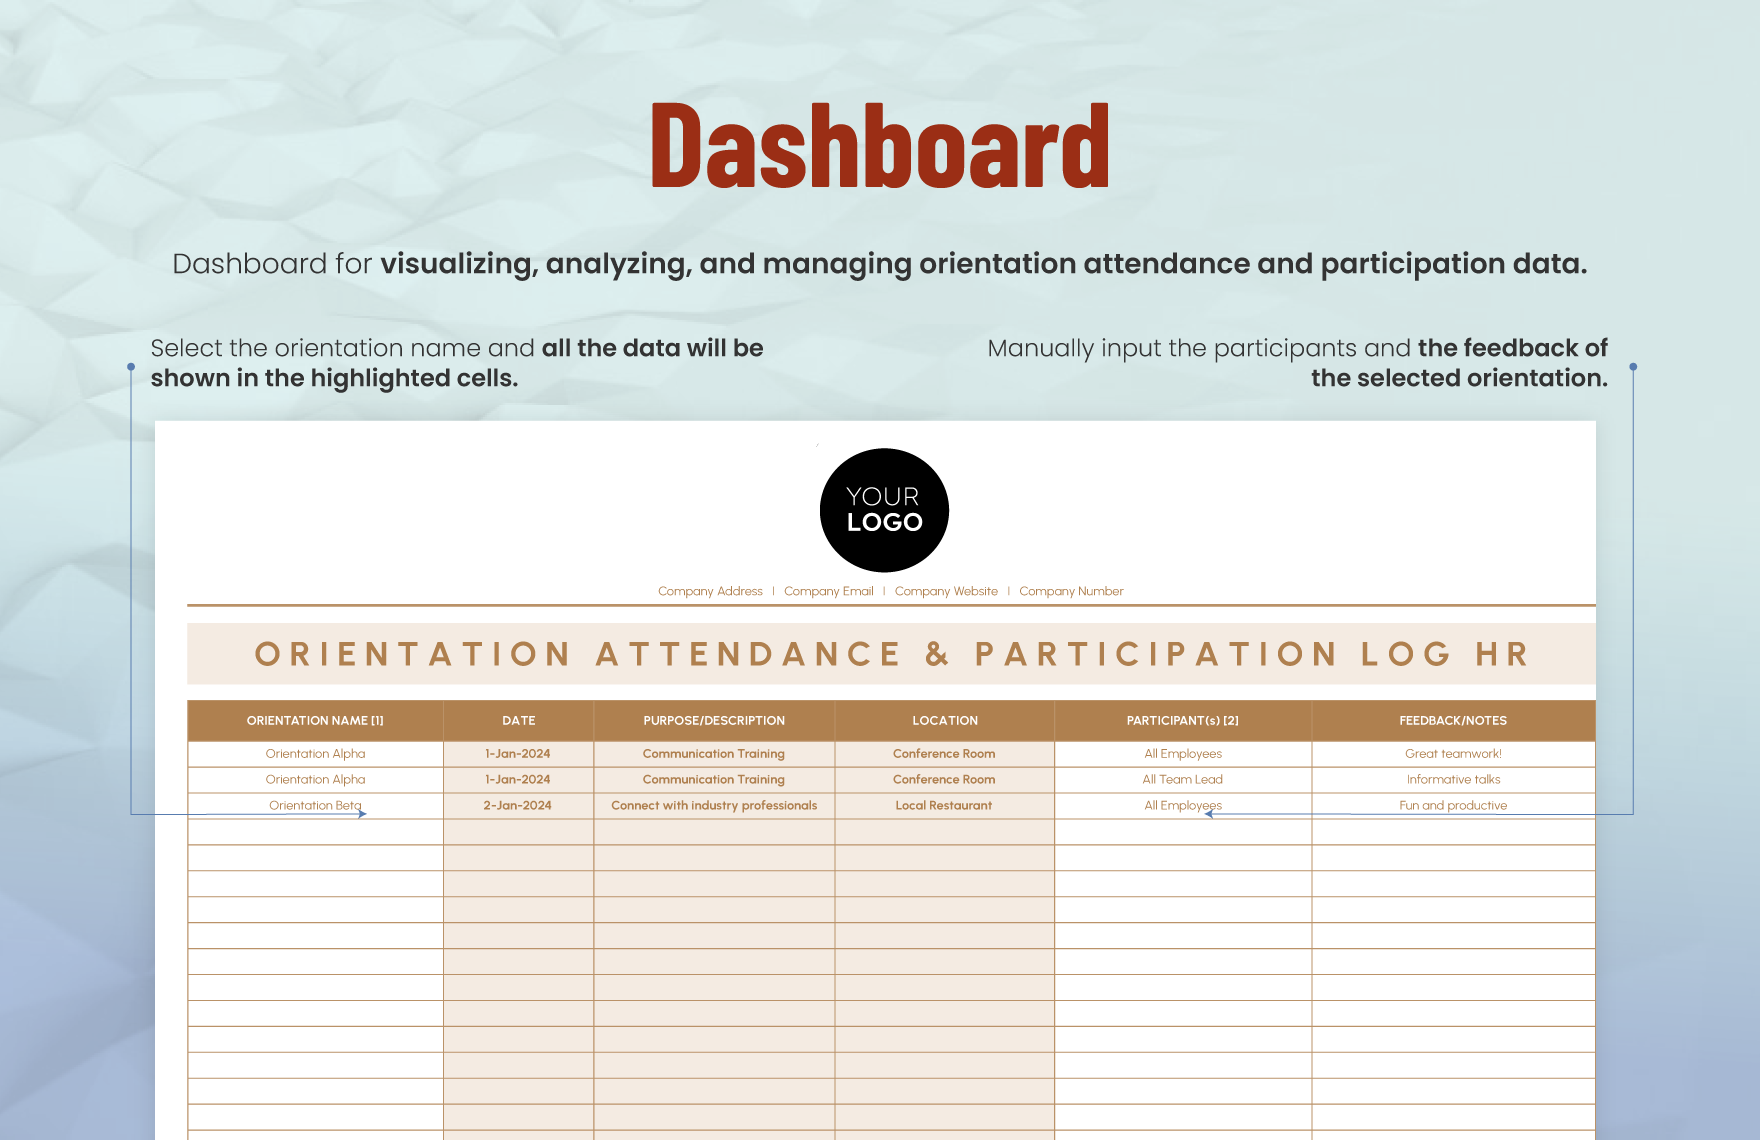 Orientation Attendance & Participation Log HR Template